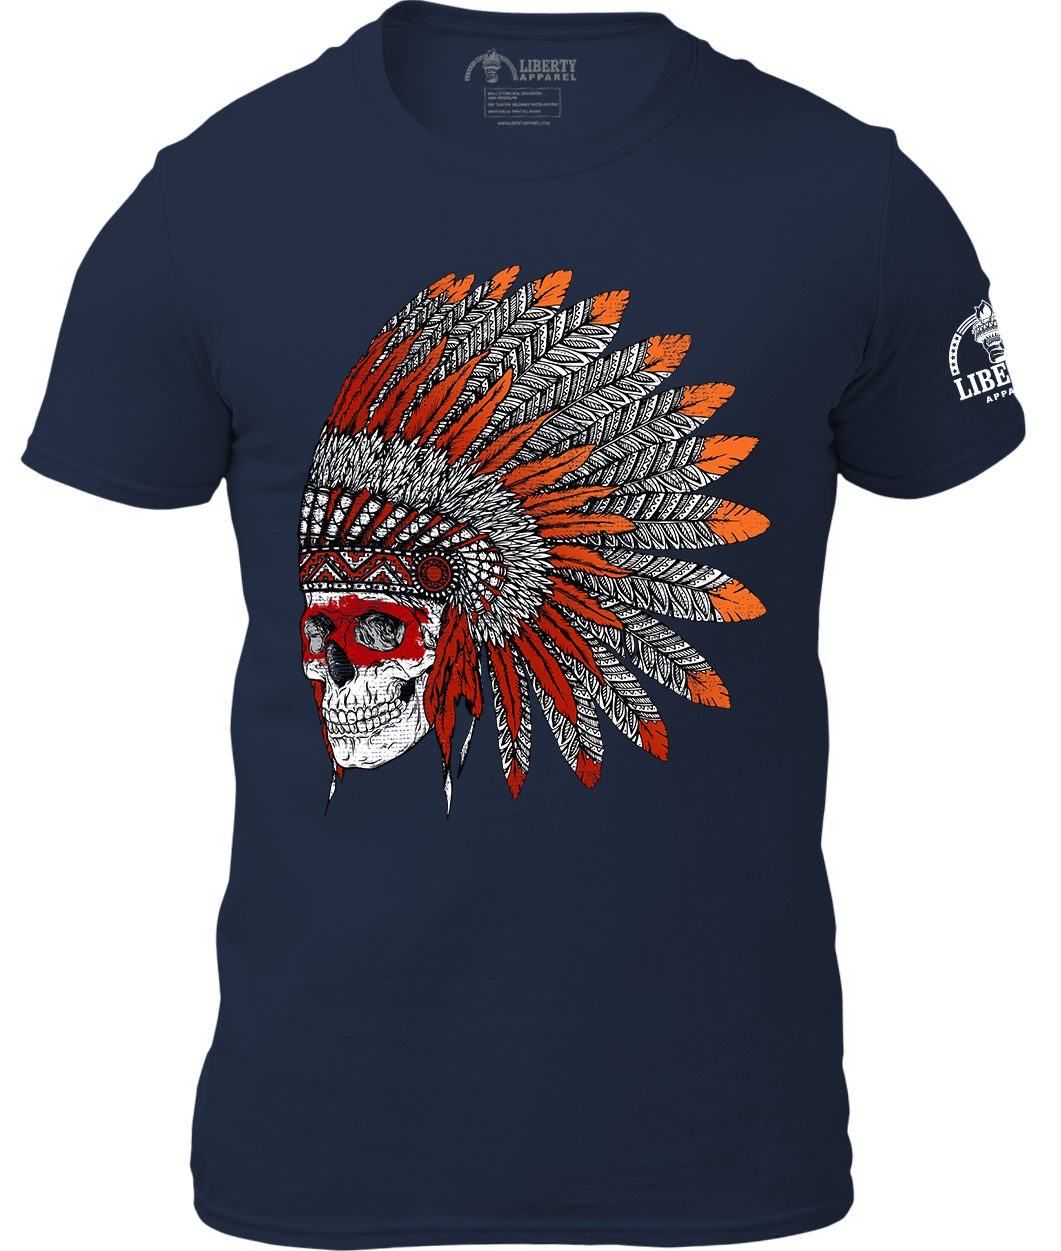 Native American Headdress